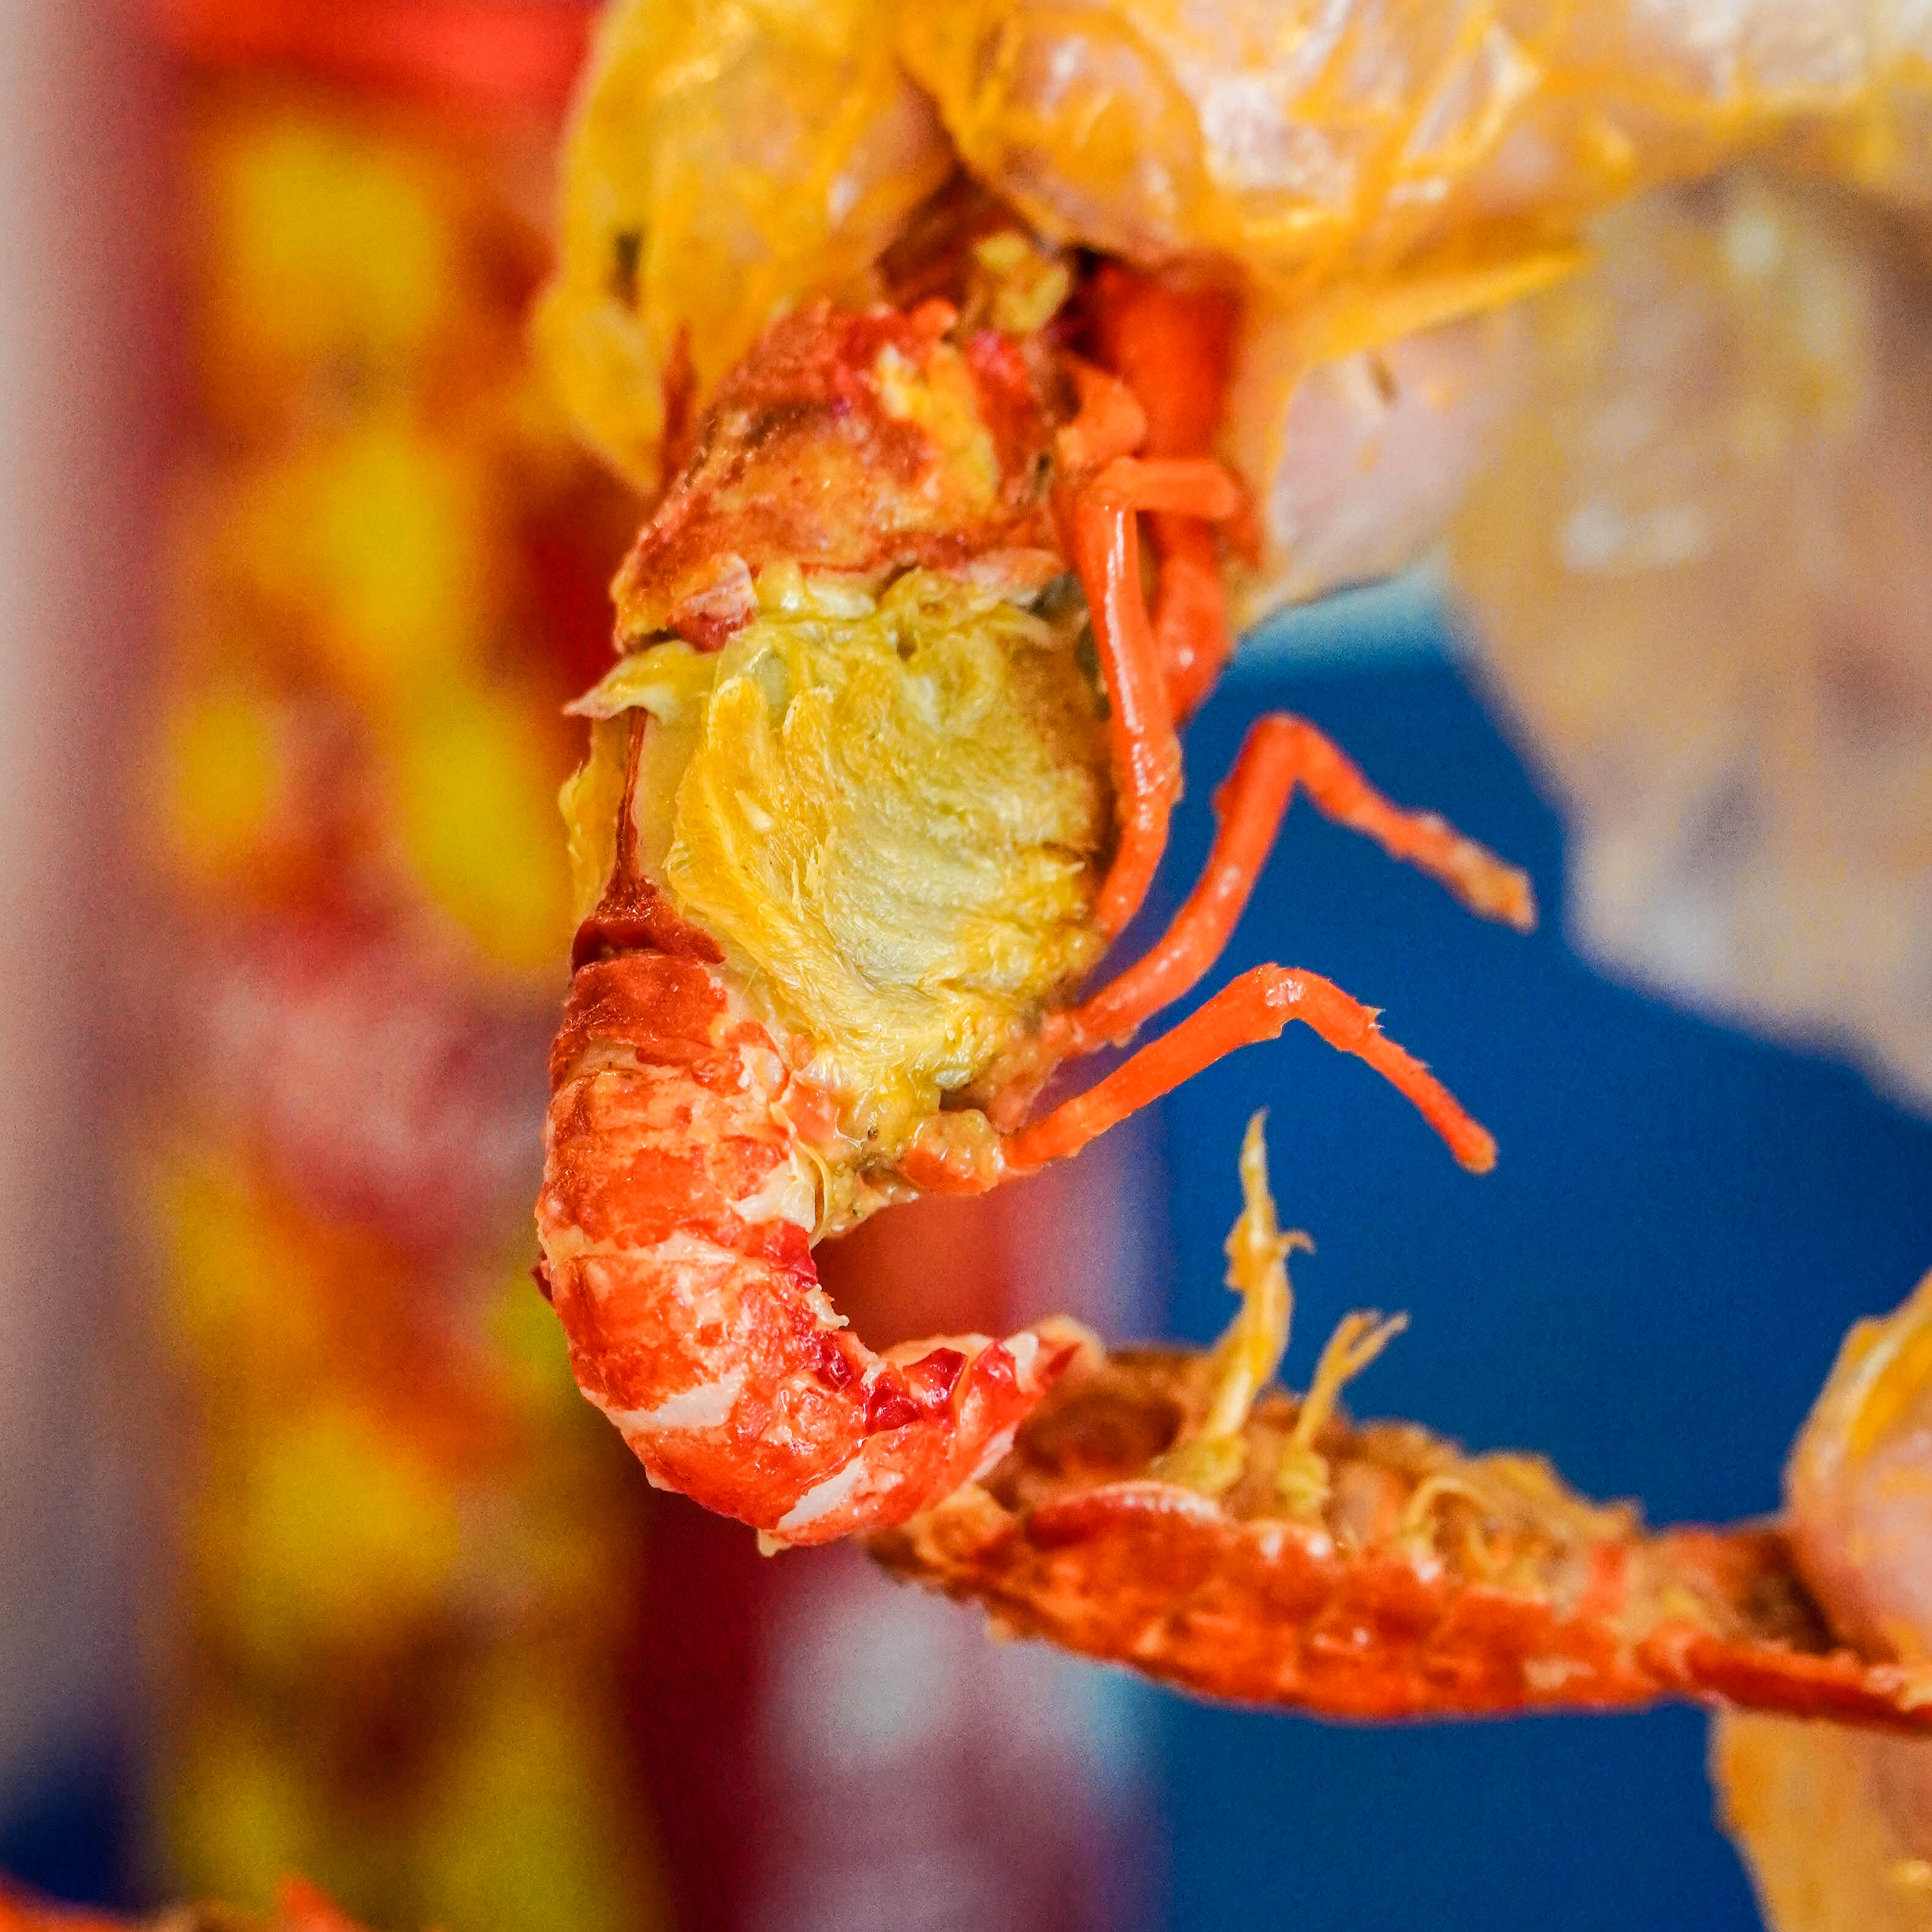 Lobster Bay - Voucher 500g Crawfish Sốt Tự Chọn 